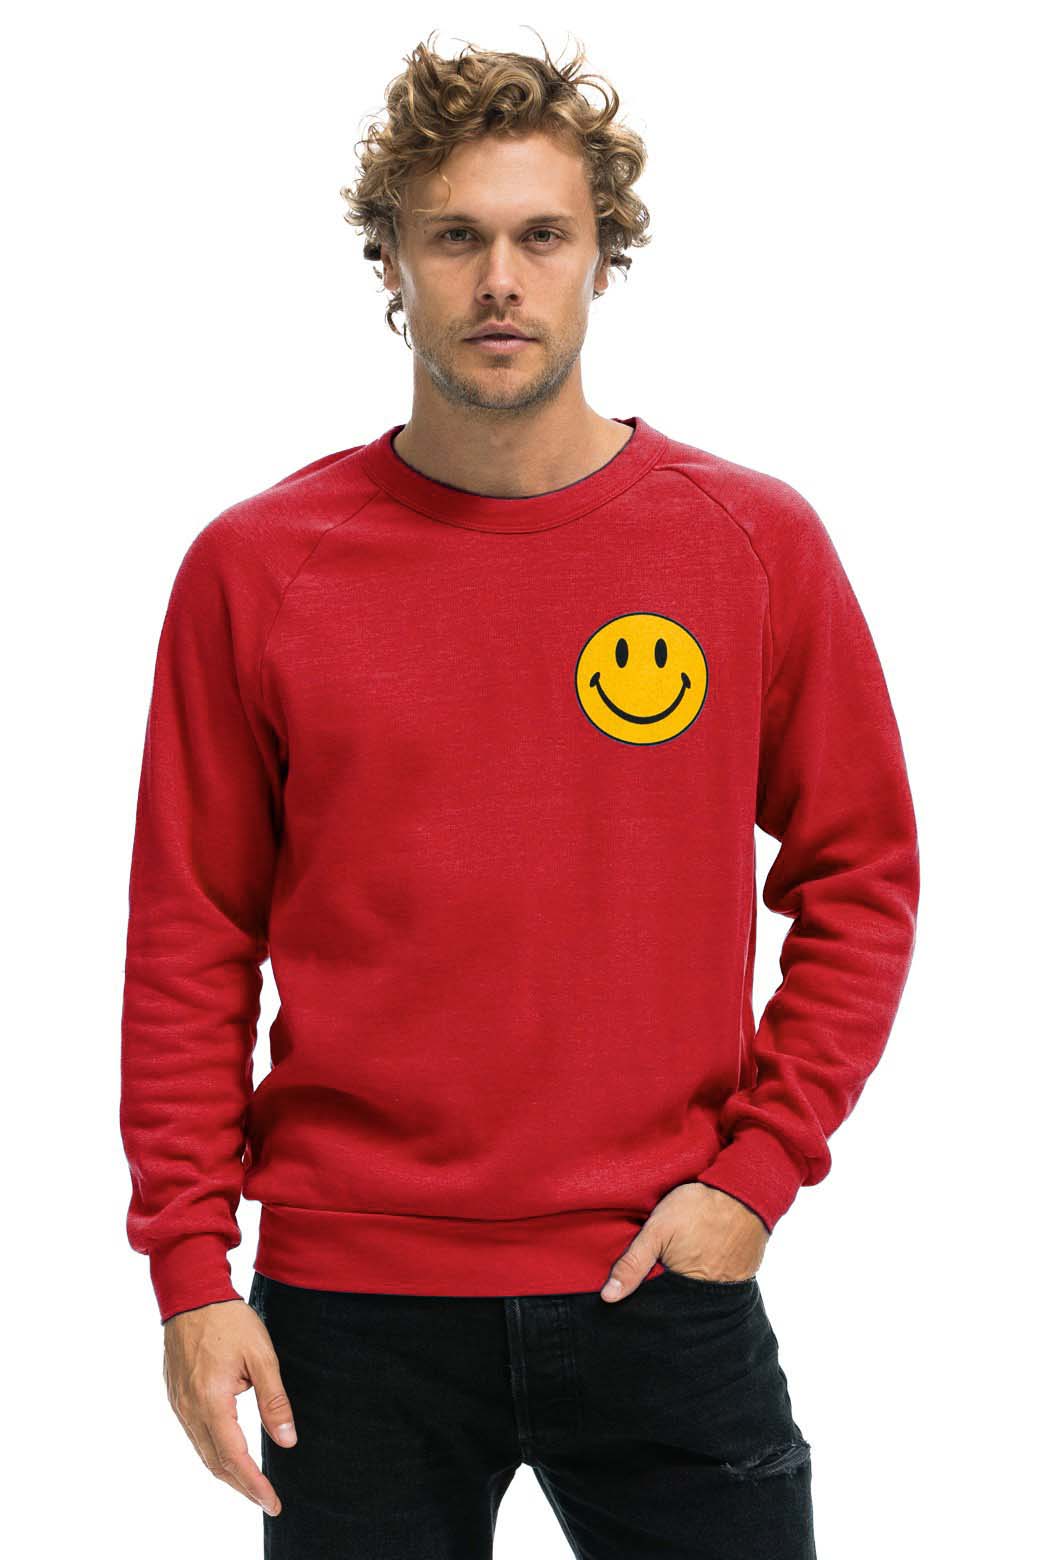 SMILEY 2 CREW SWEATSHIRT - RED Sweatshirt Aviator Nation 